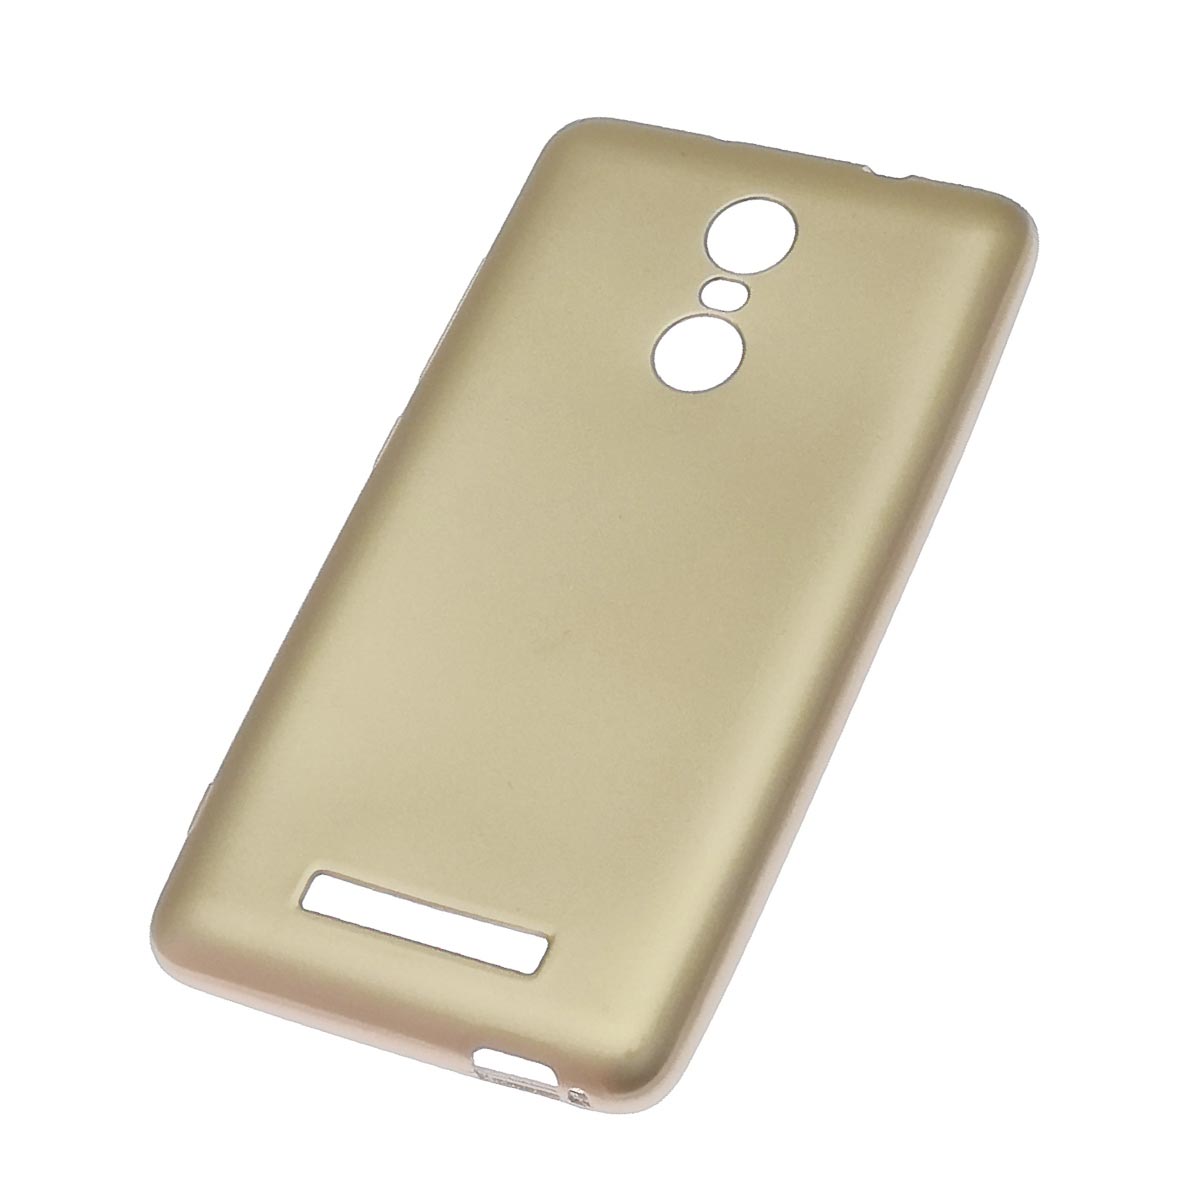 Чехол накладка J-Case THIN для XIAOMI Redmi Note 3, Redmi Note 3 Pro, силикон, цвет золотистый.